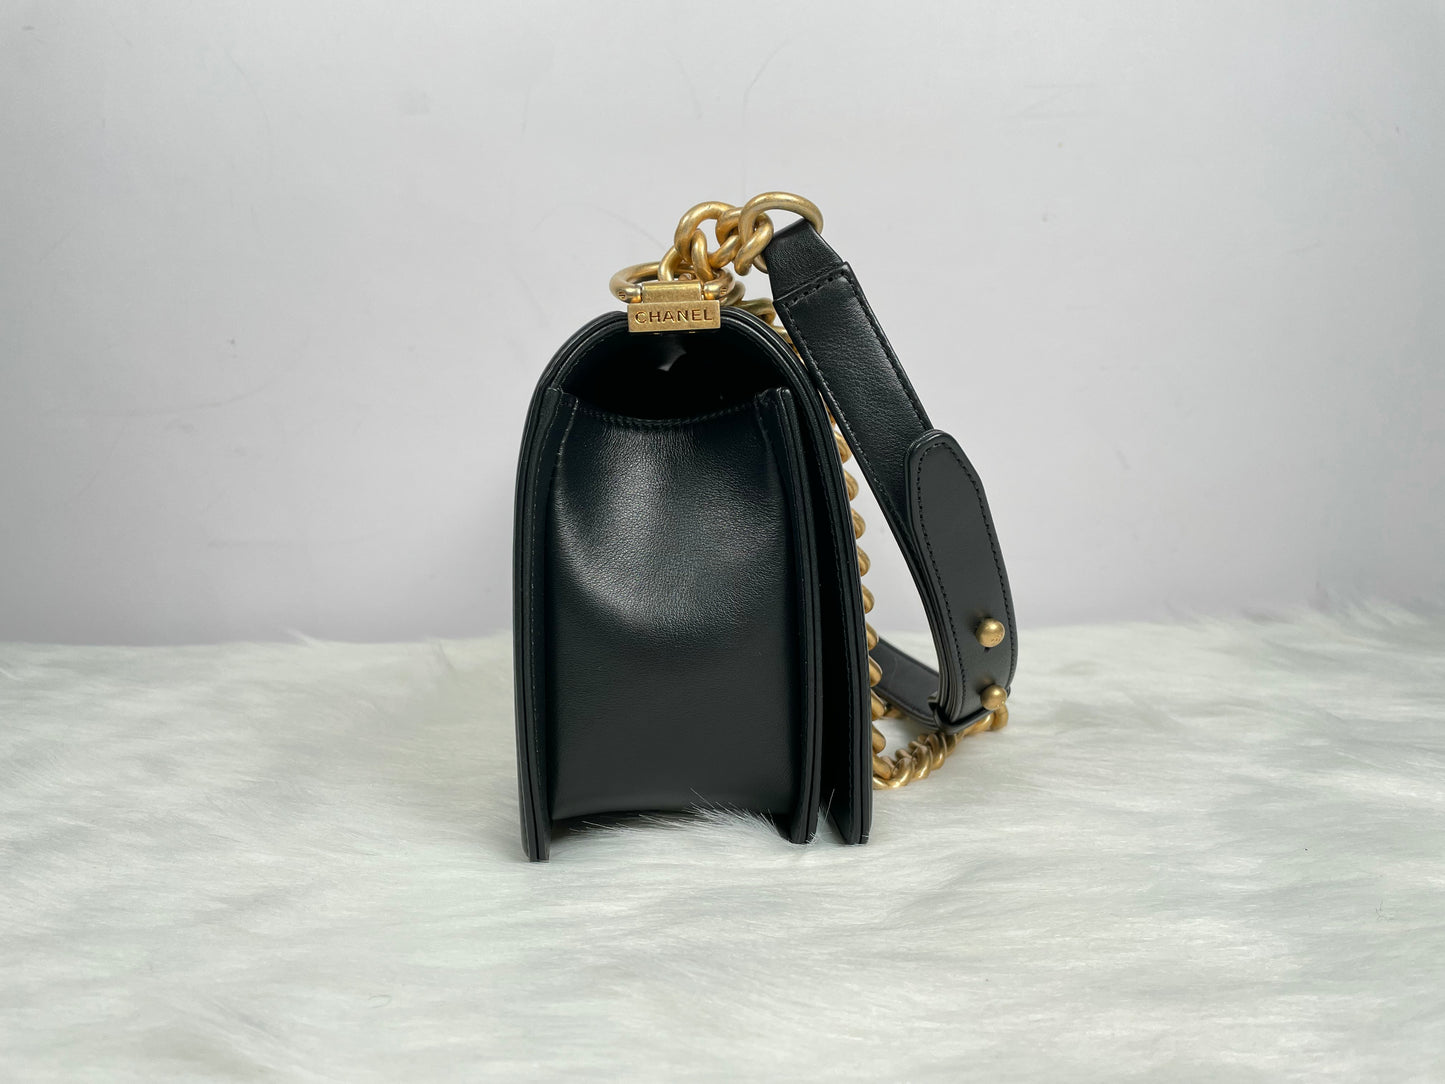 Chanel Boy Chanel Handbag 黑色牛皮金扣